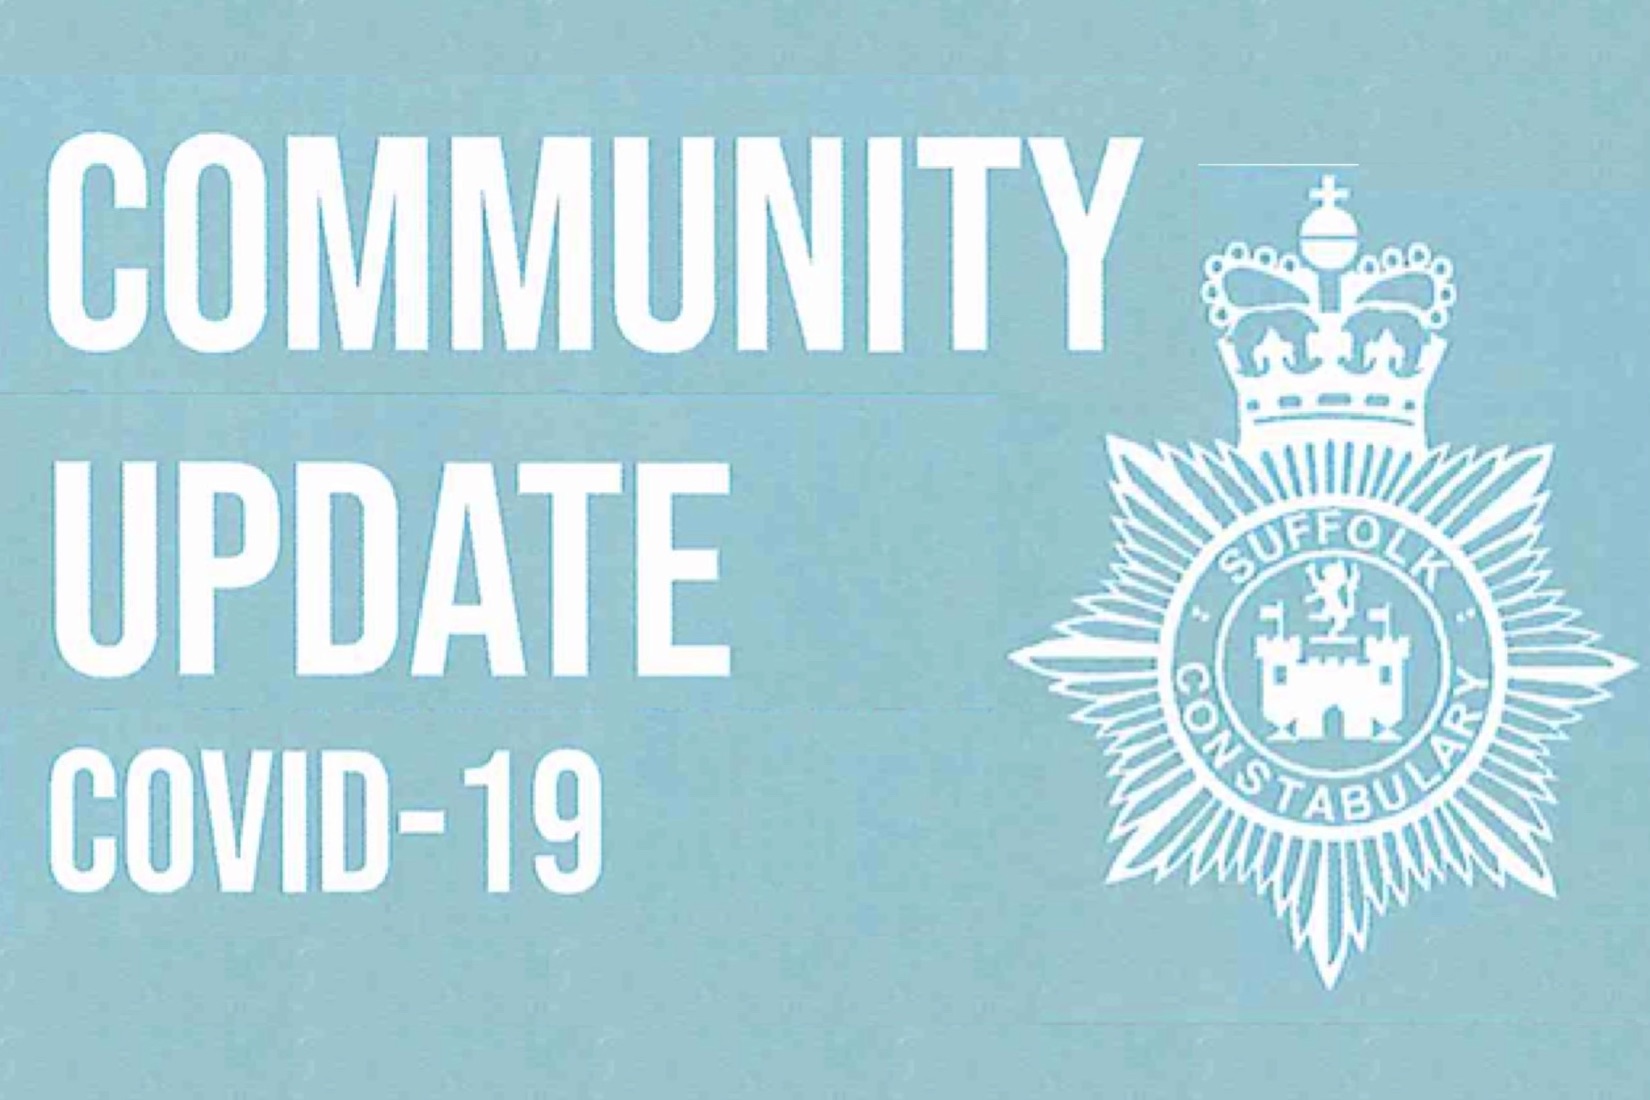 Police Community Update Covid19, 22'3'21